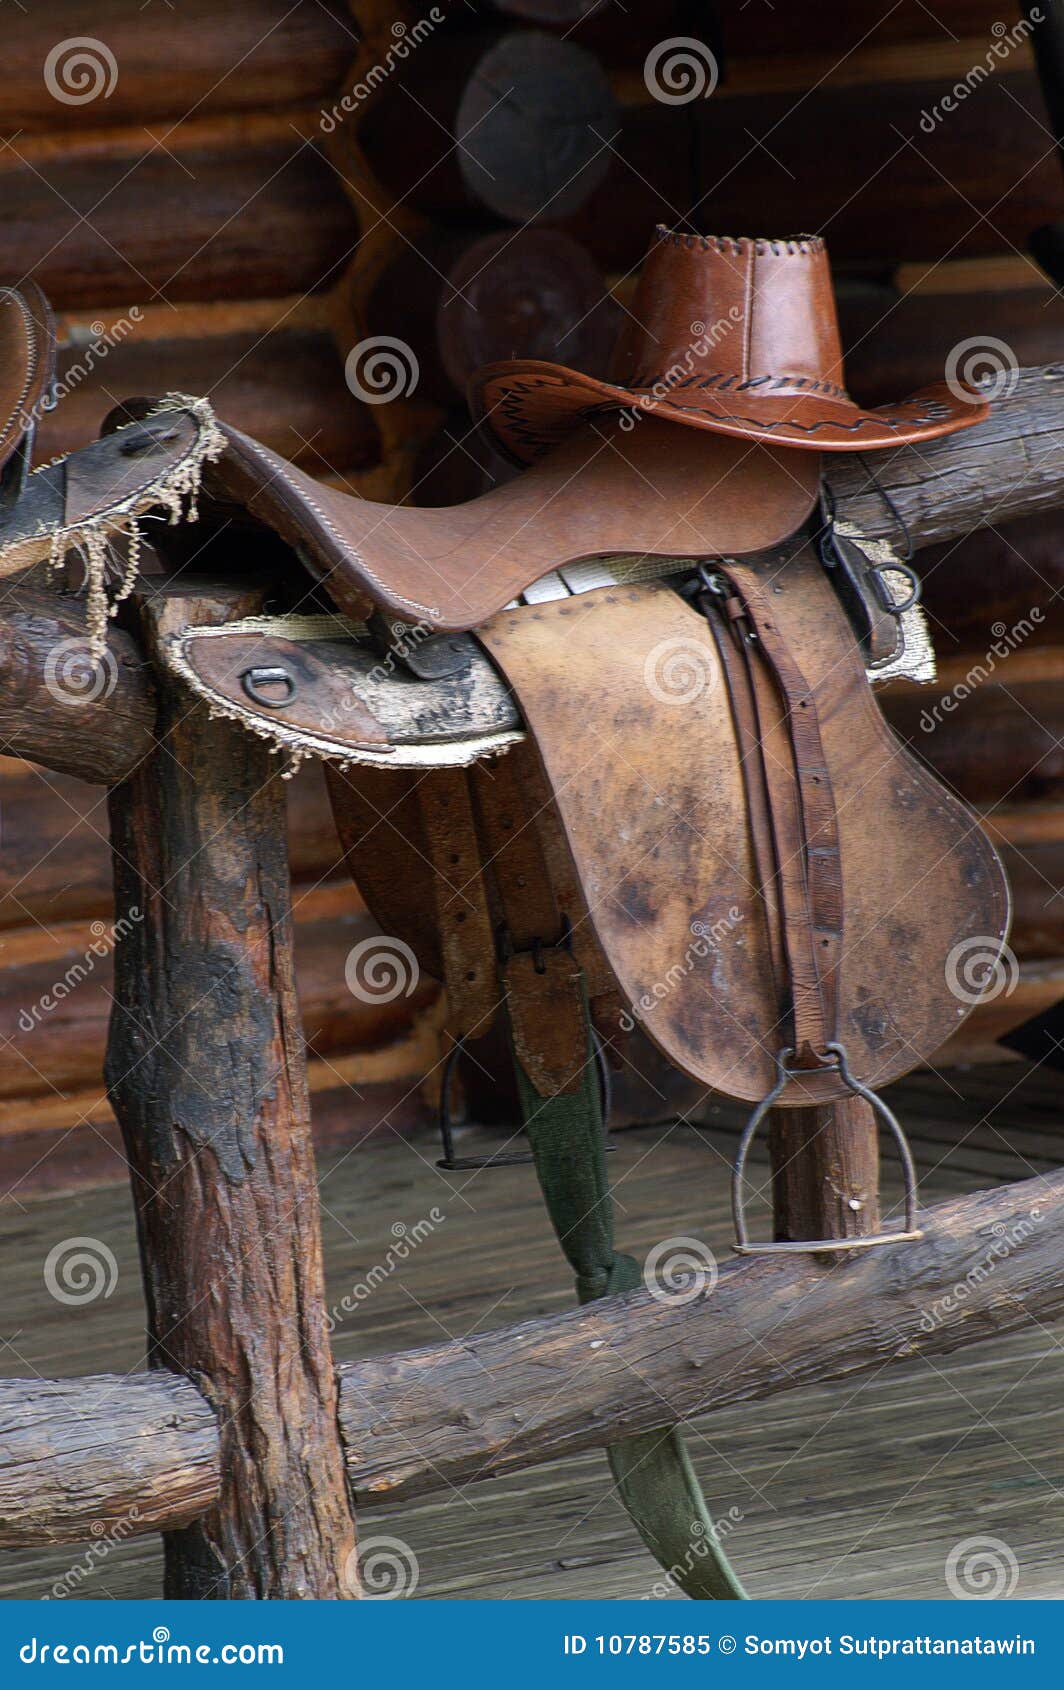 saddle for horse